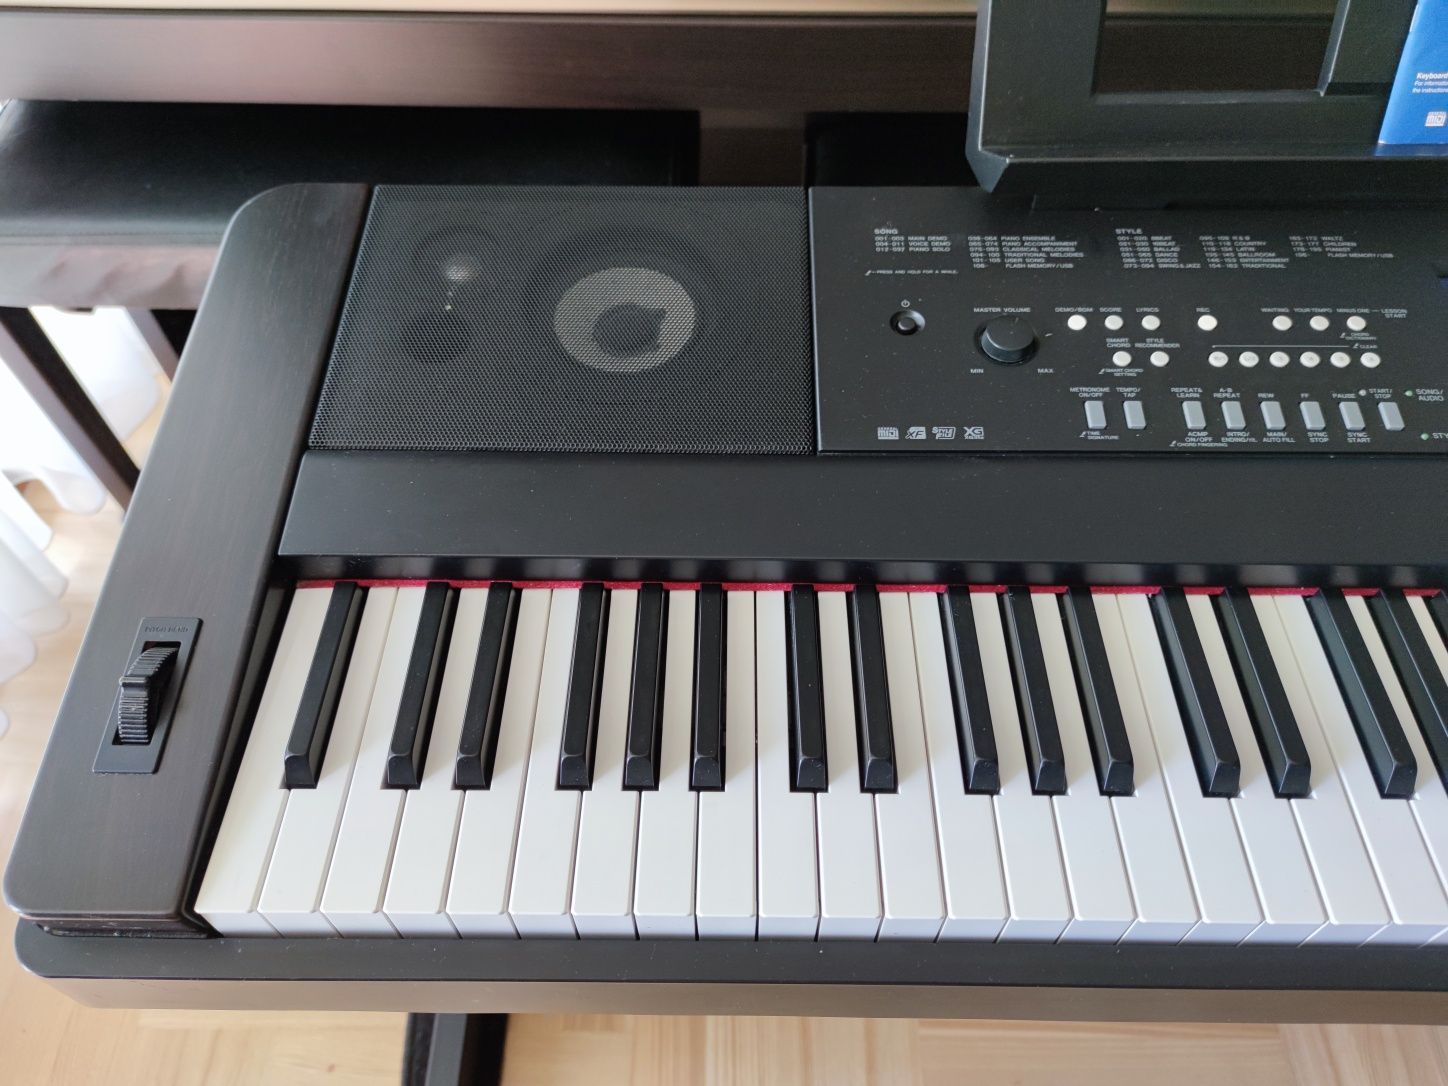 Yamaha dgx650 pianino cyfrowe, keyboard, gwarancja, transport